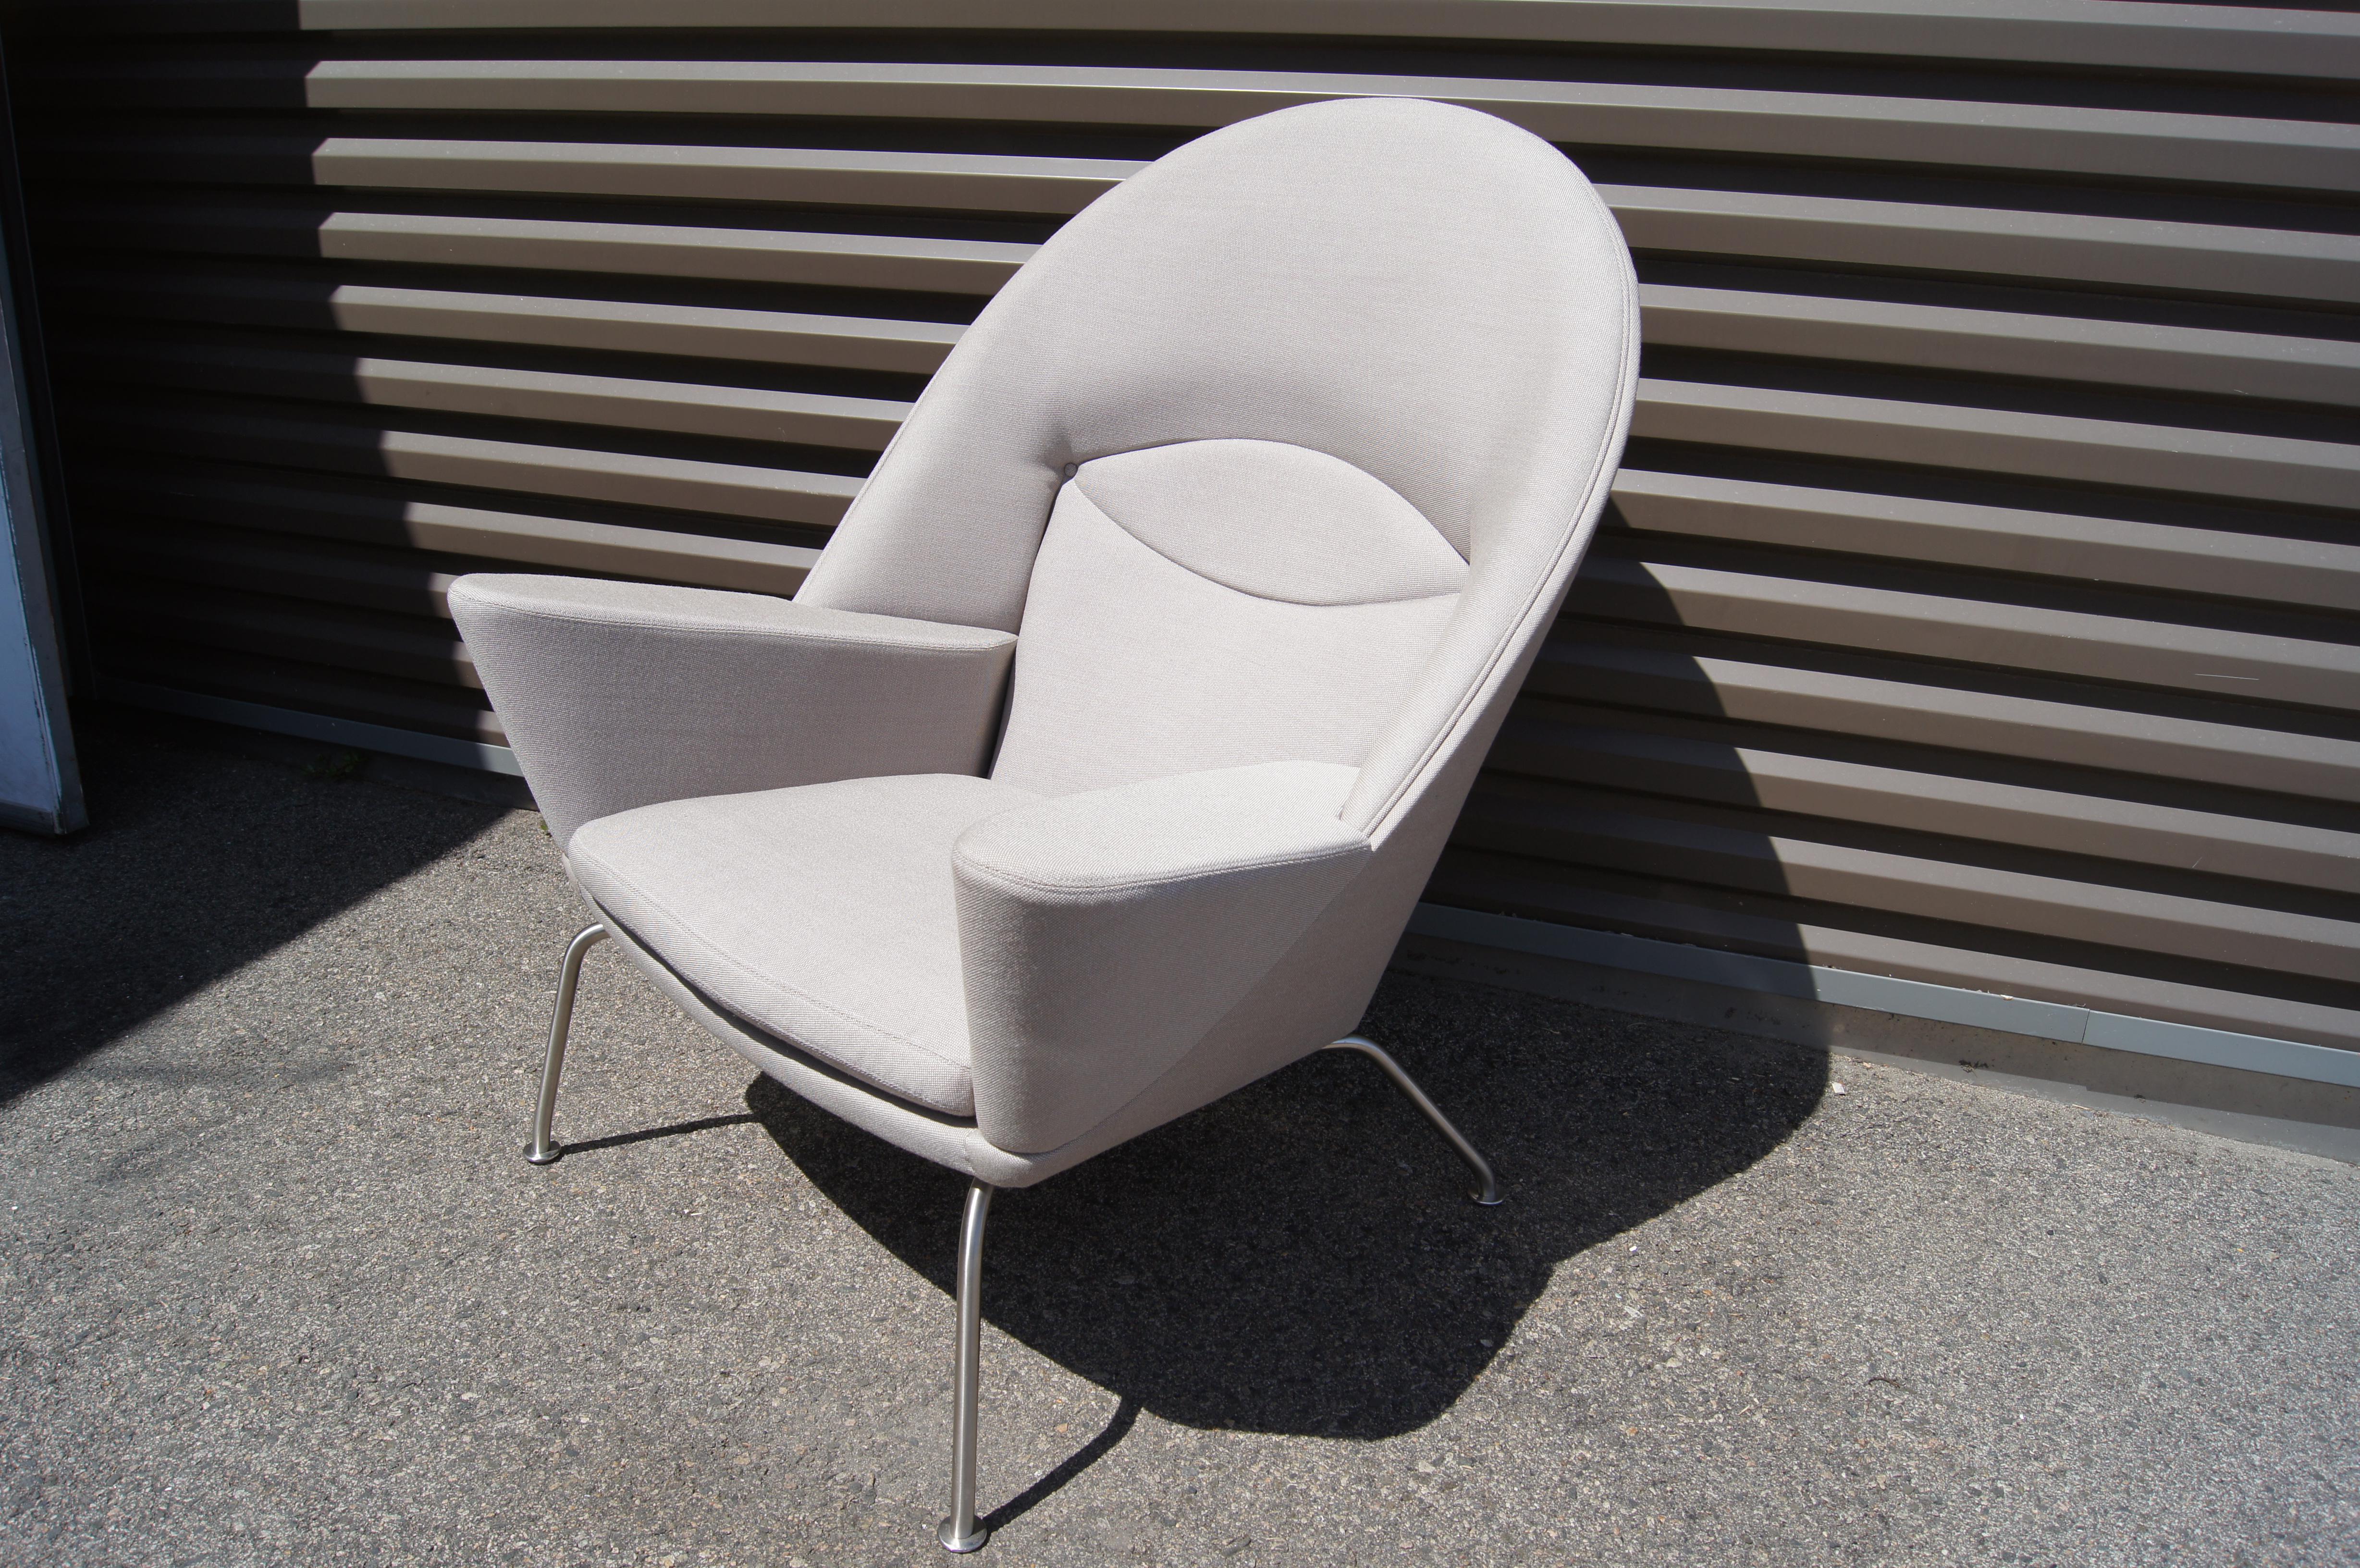 Contemporary Oculus Chair, Model CH468, by Hans Wegner for Carl Hansen & Son